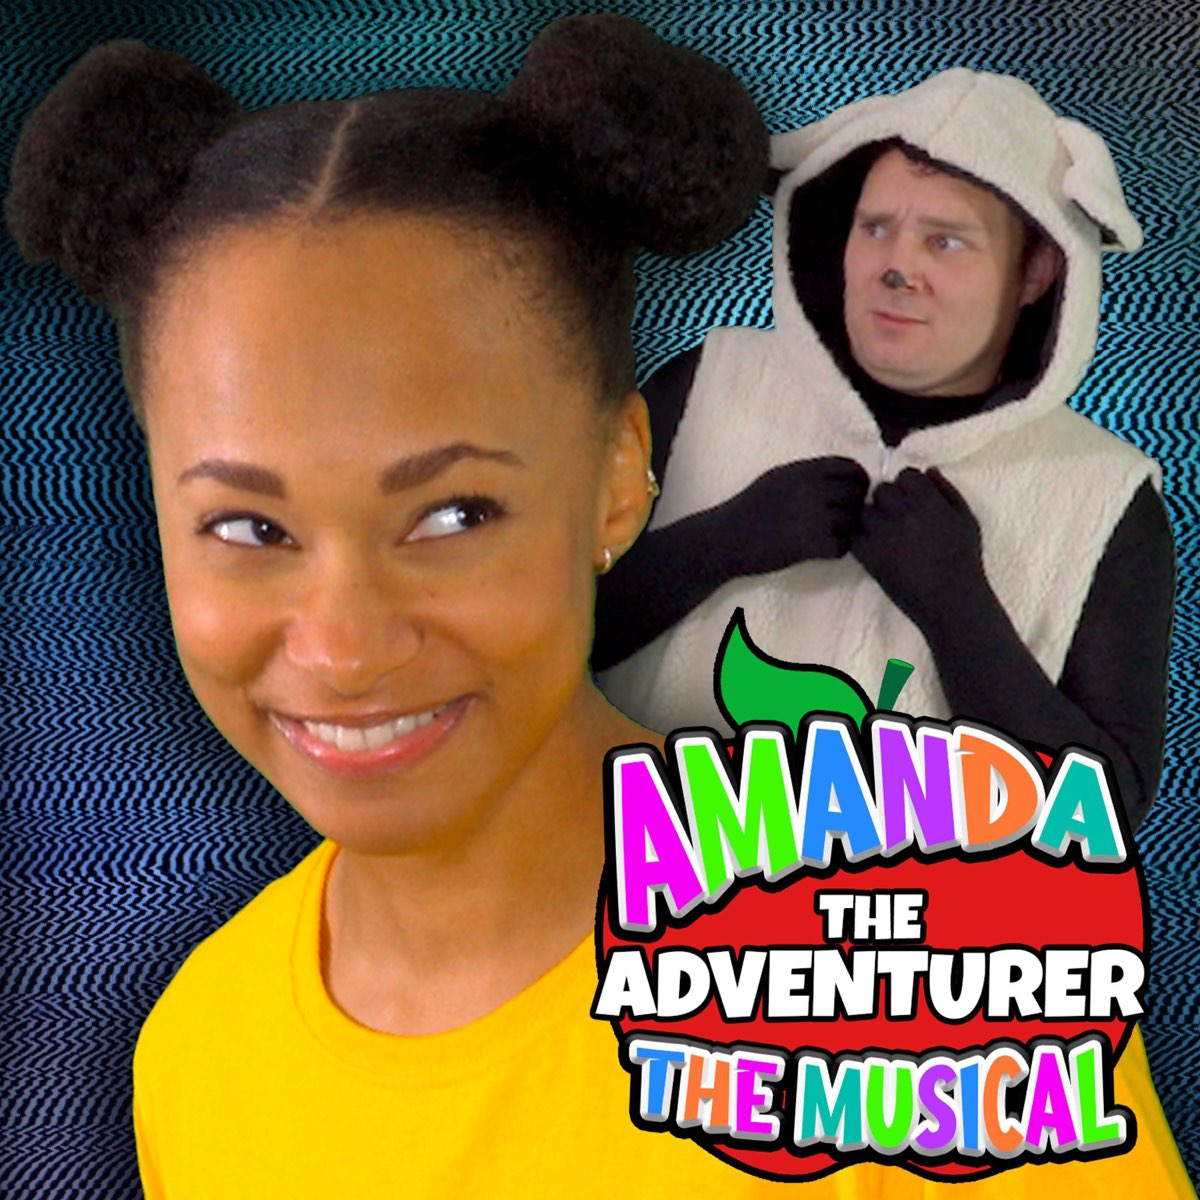 Amanda The Adventurer Song - song and lyrics by Lankybox